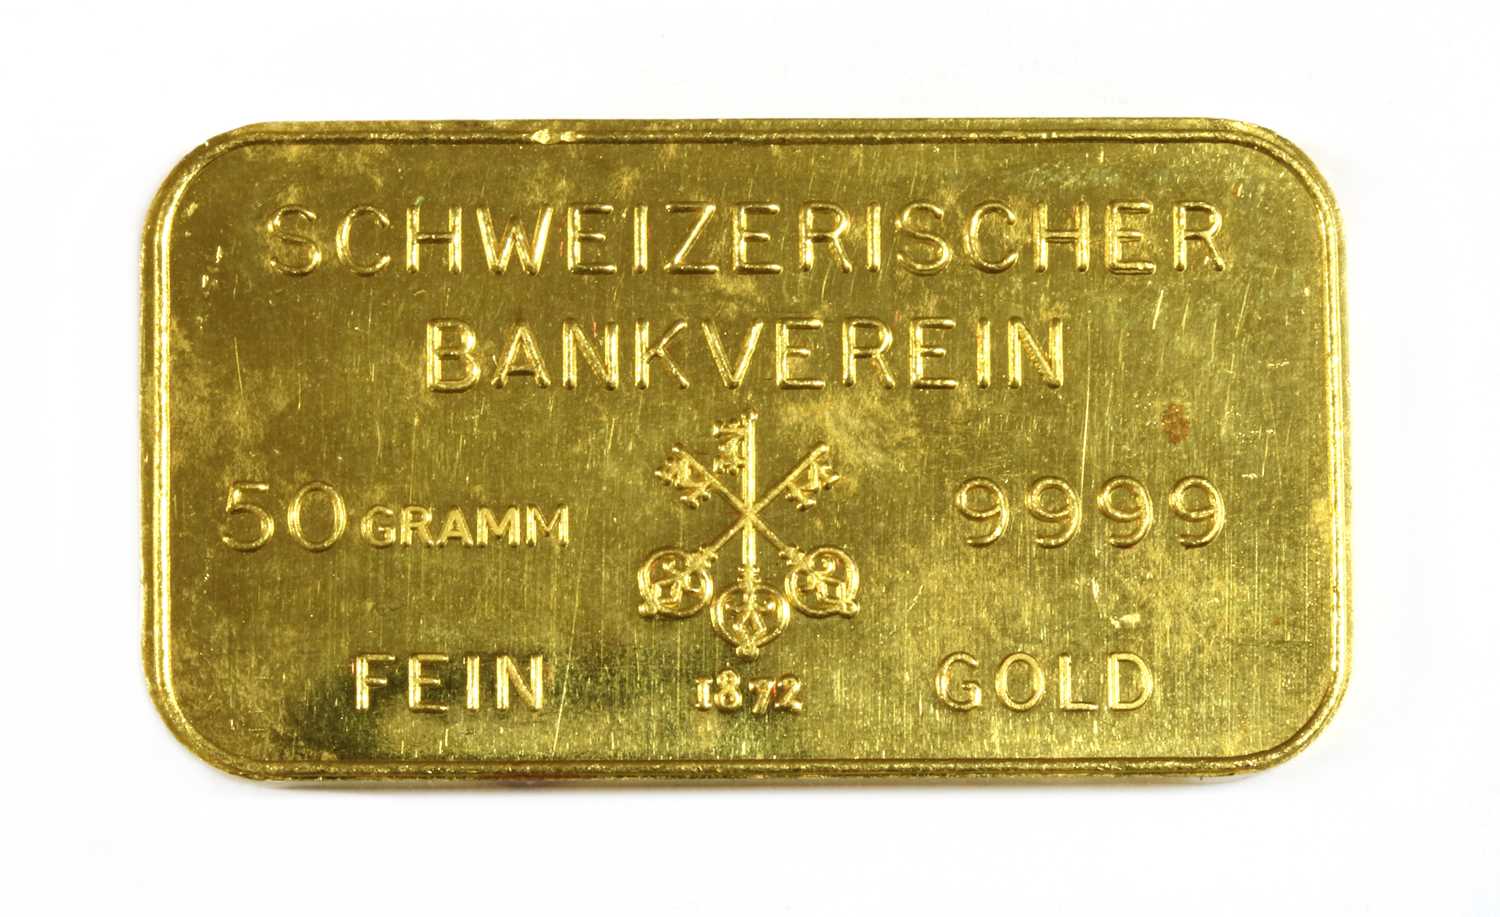 A 50g fine gold bar, - Image 2 of 2